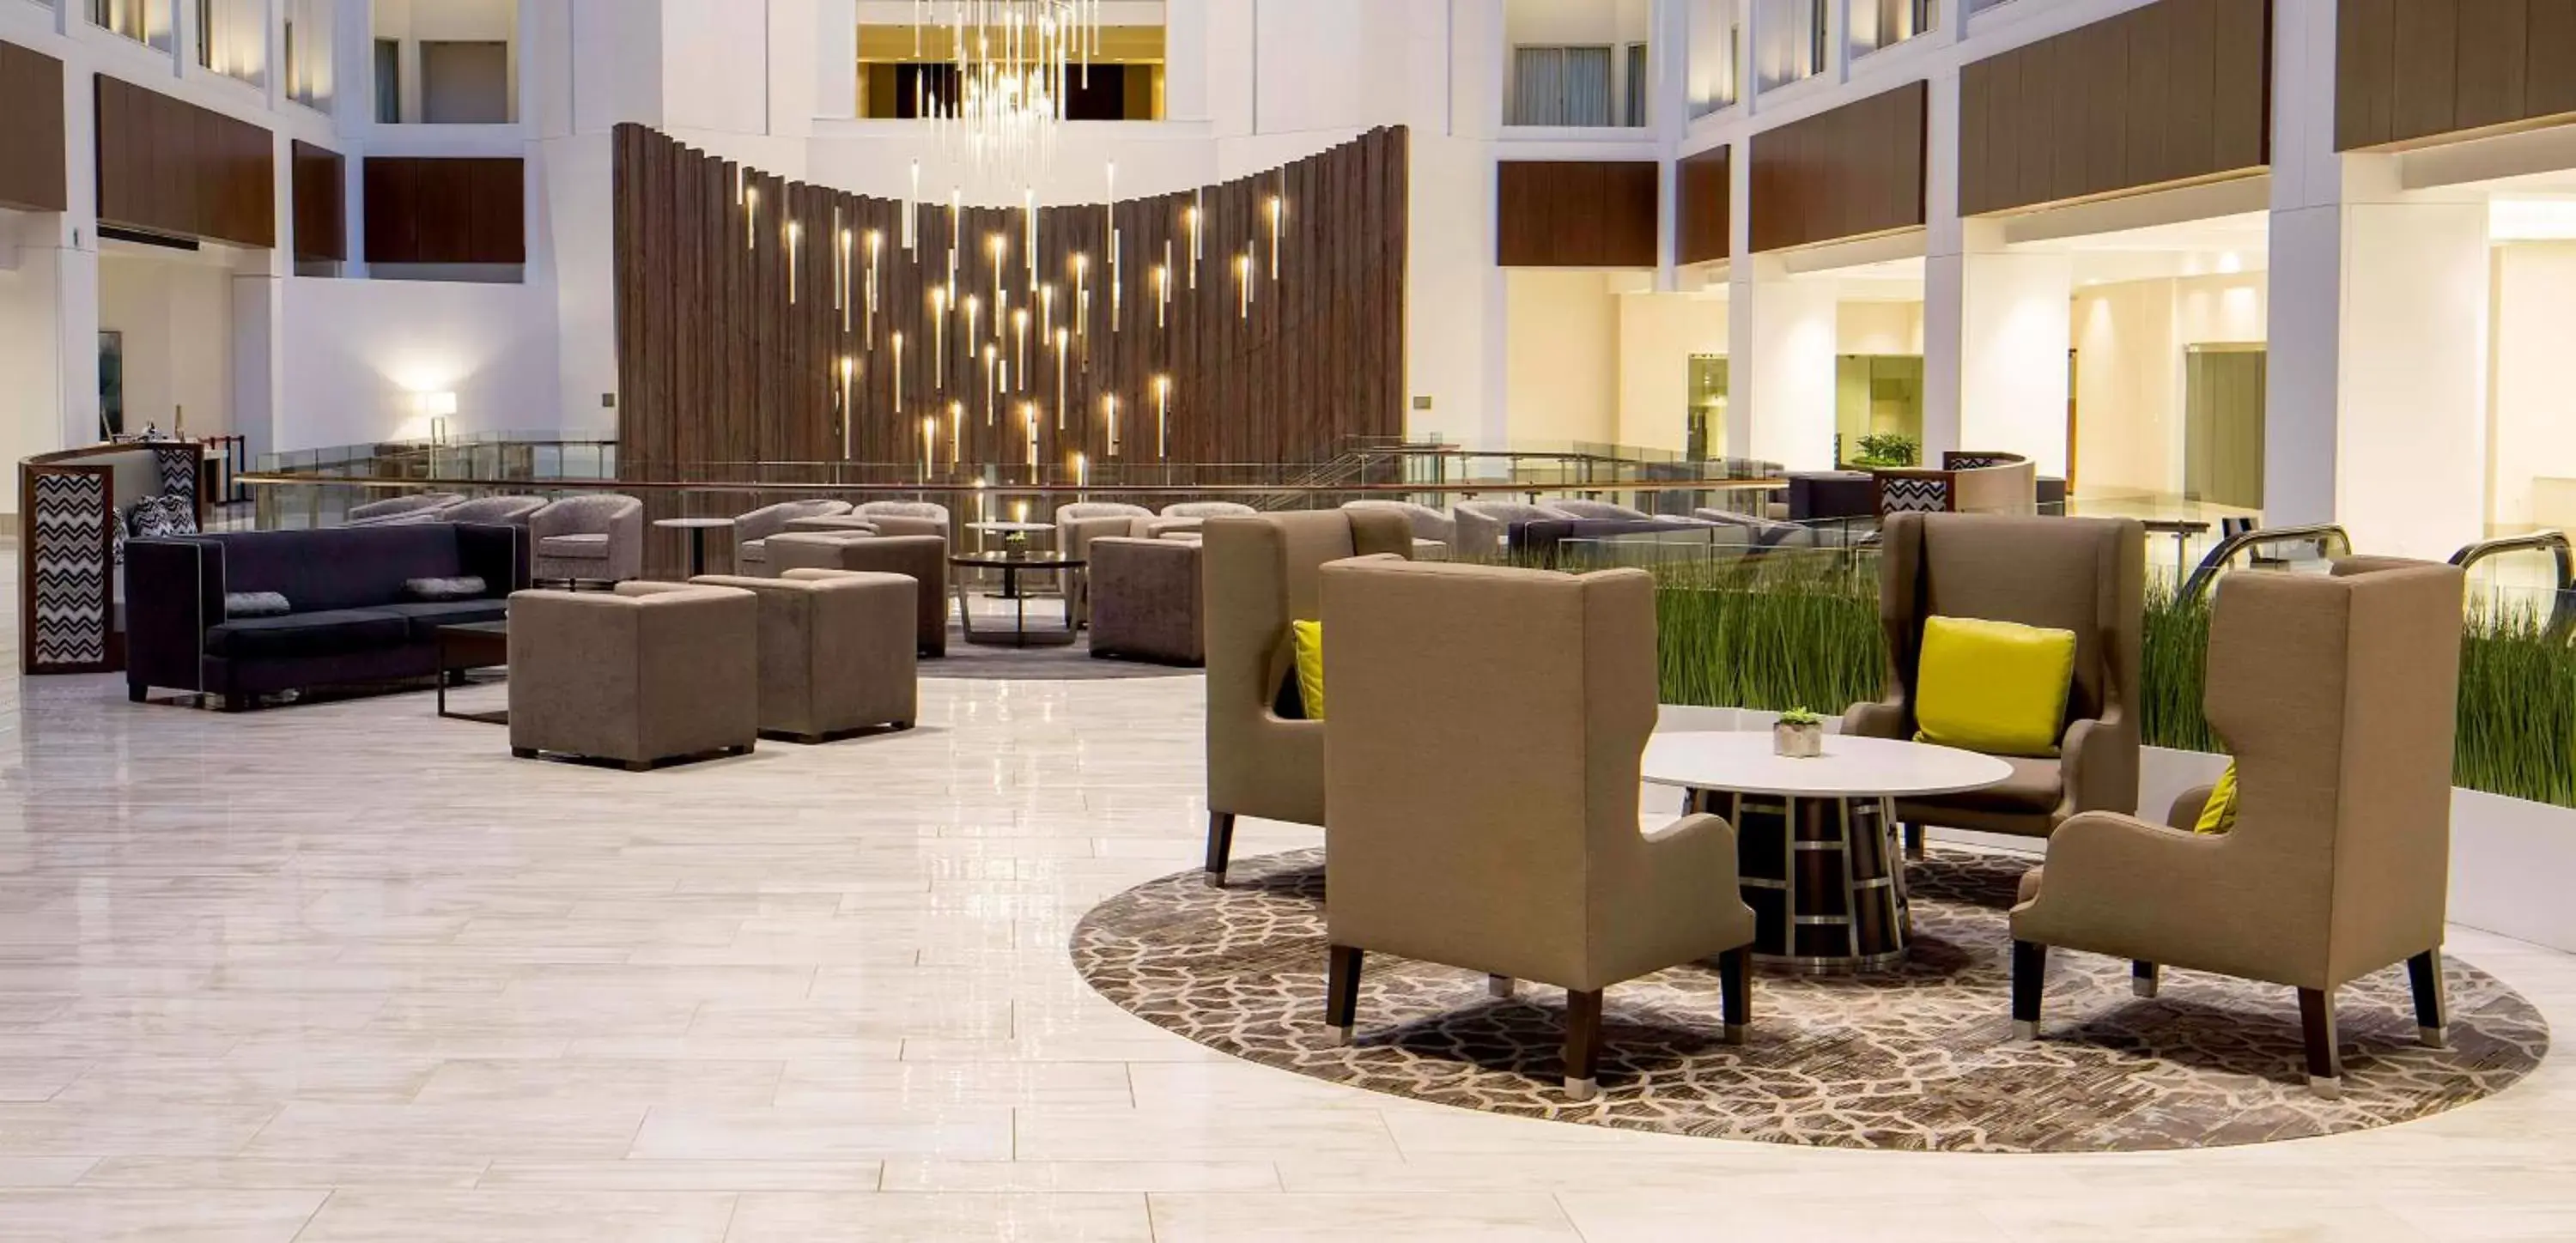 Lobby or reception in Grand Hyatt Washington